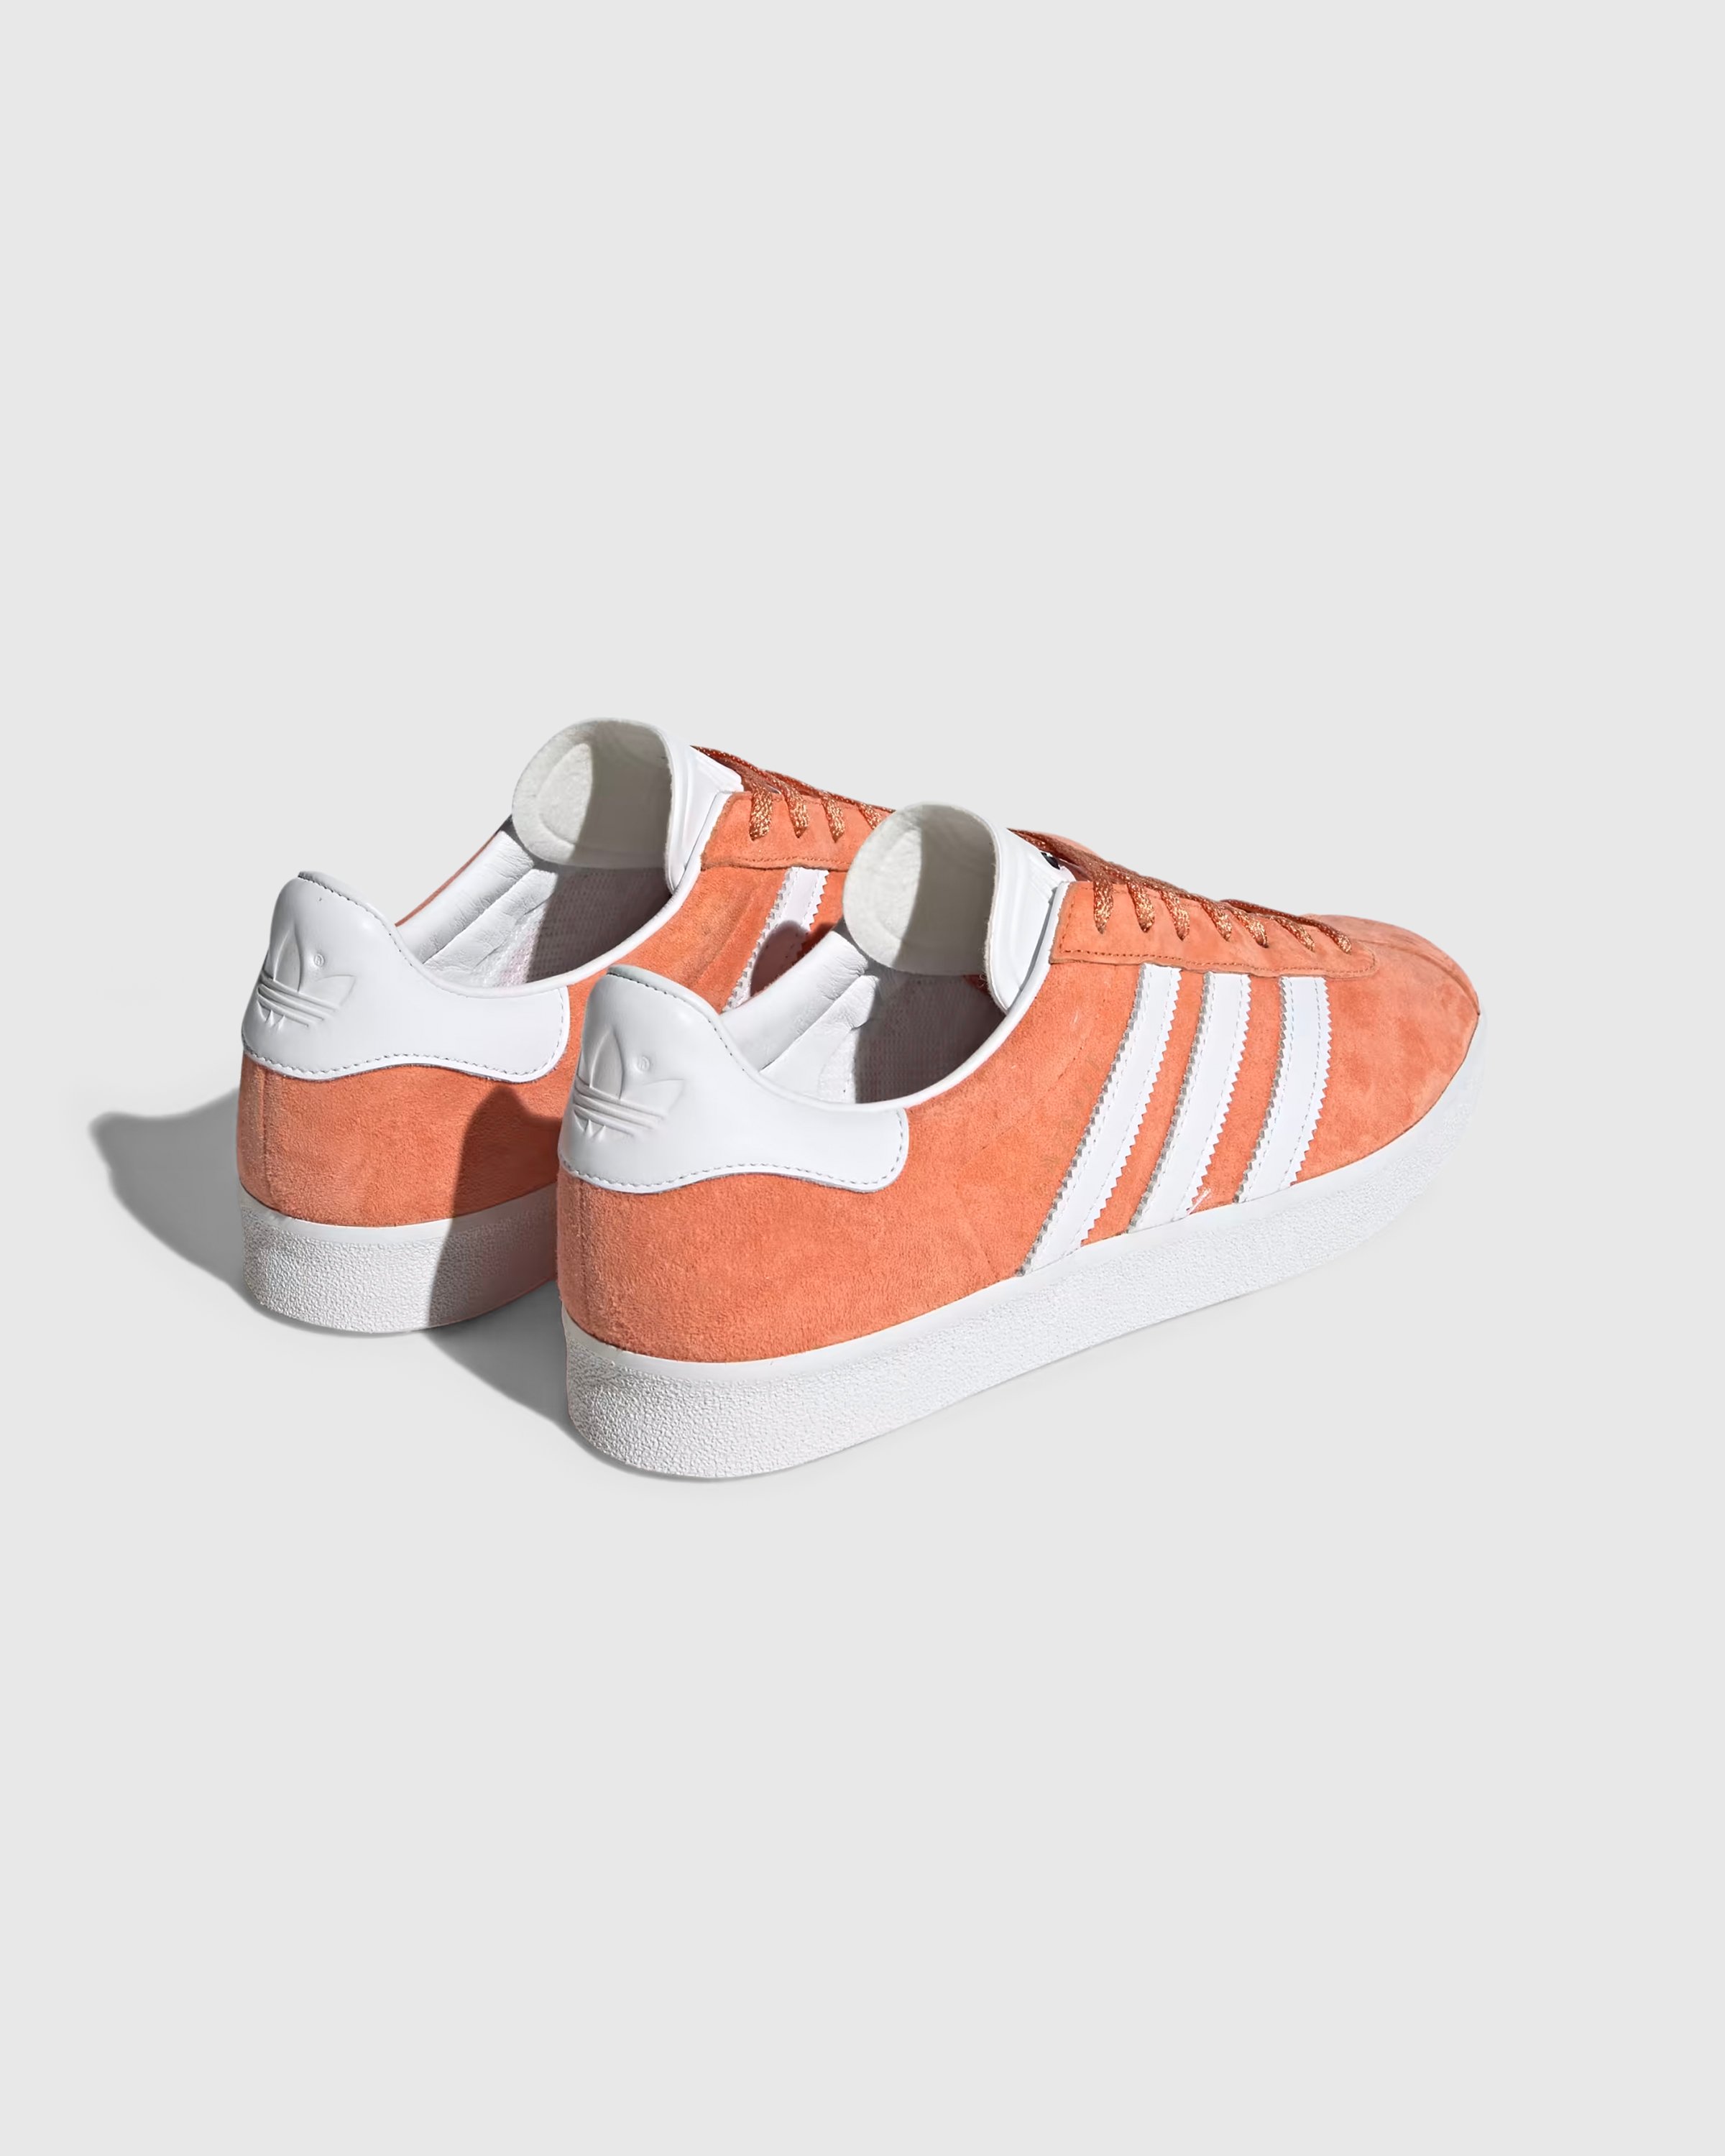 Adidas - Gazelle 85 Orange - Footwear - Orange - Image 4